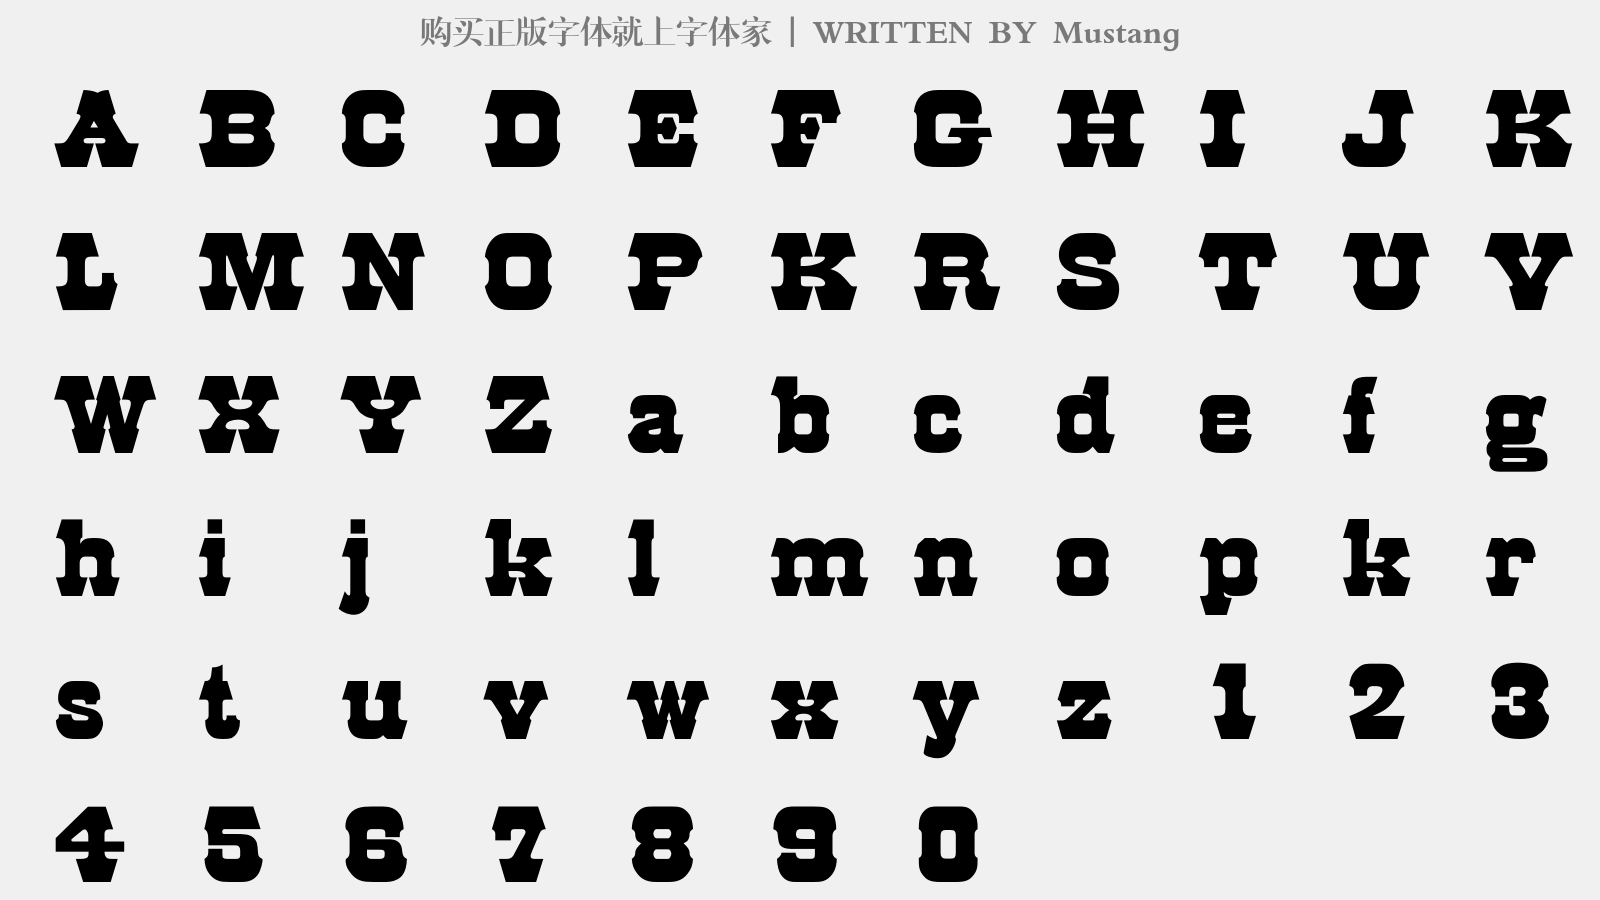 Mustang - 大写字母/小写字母/数字